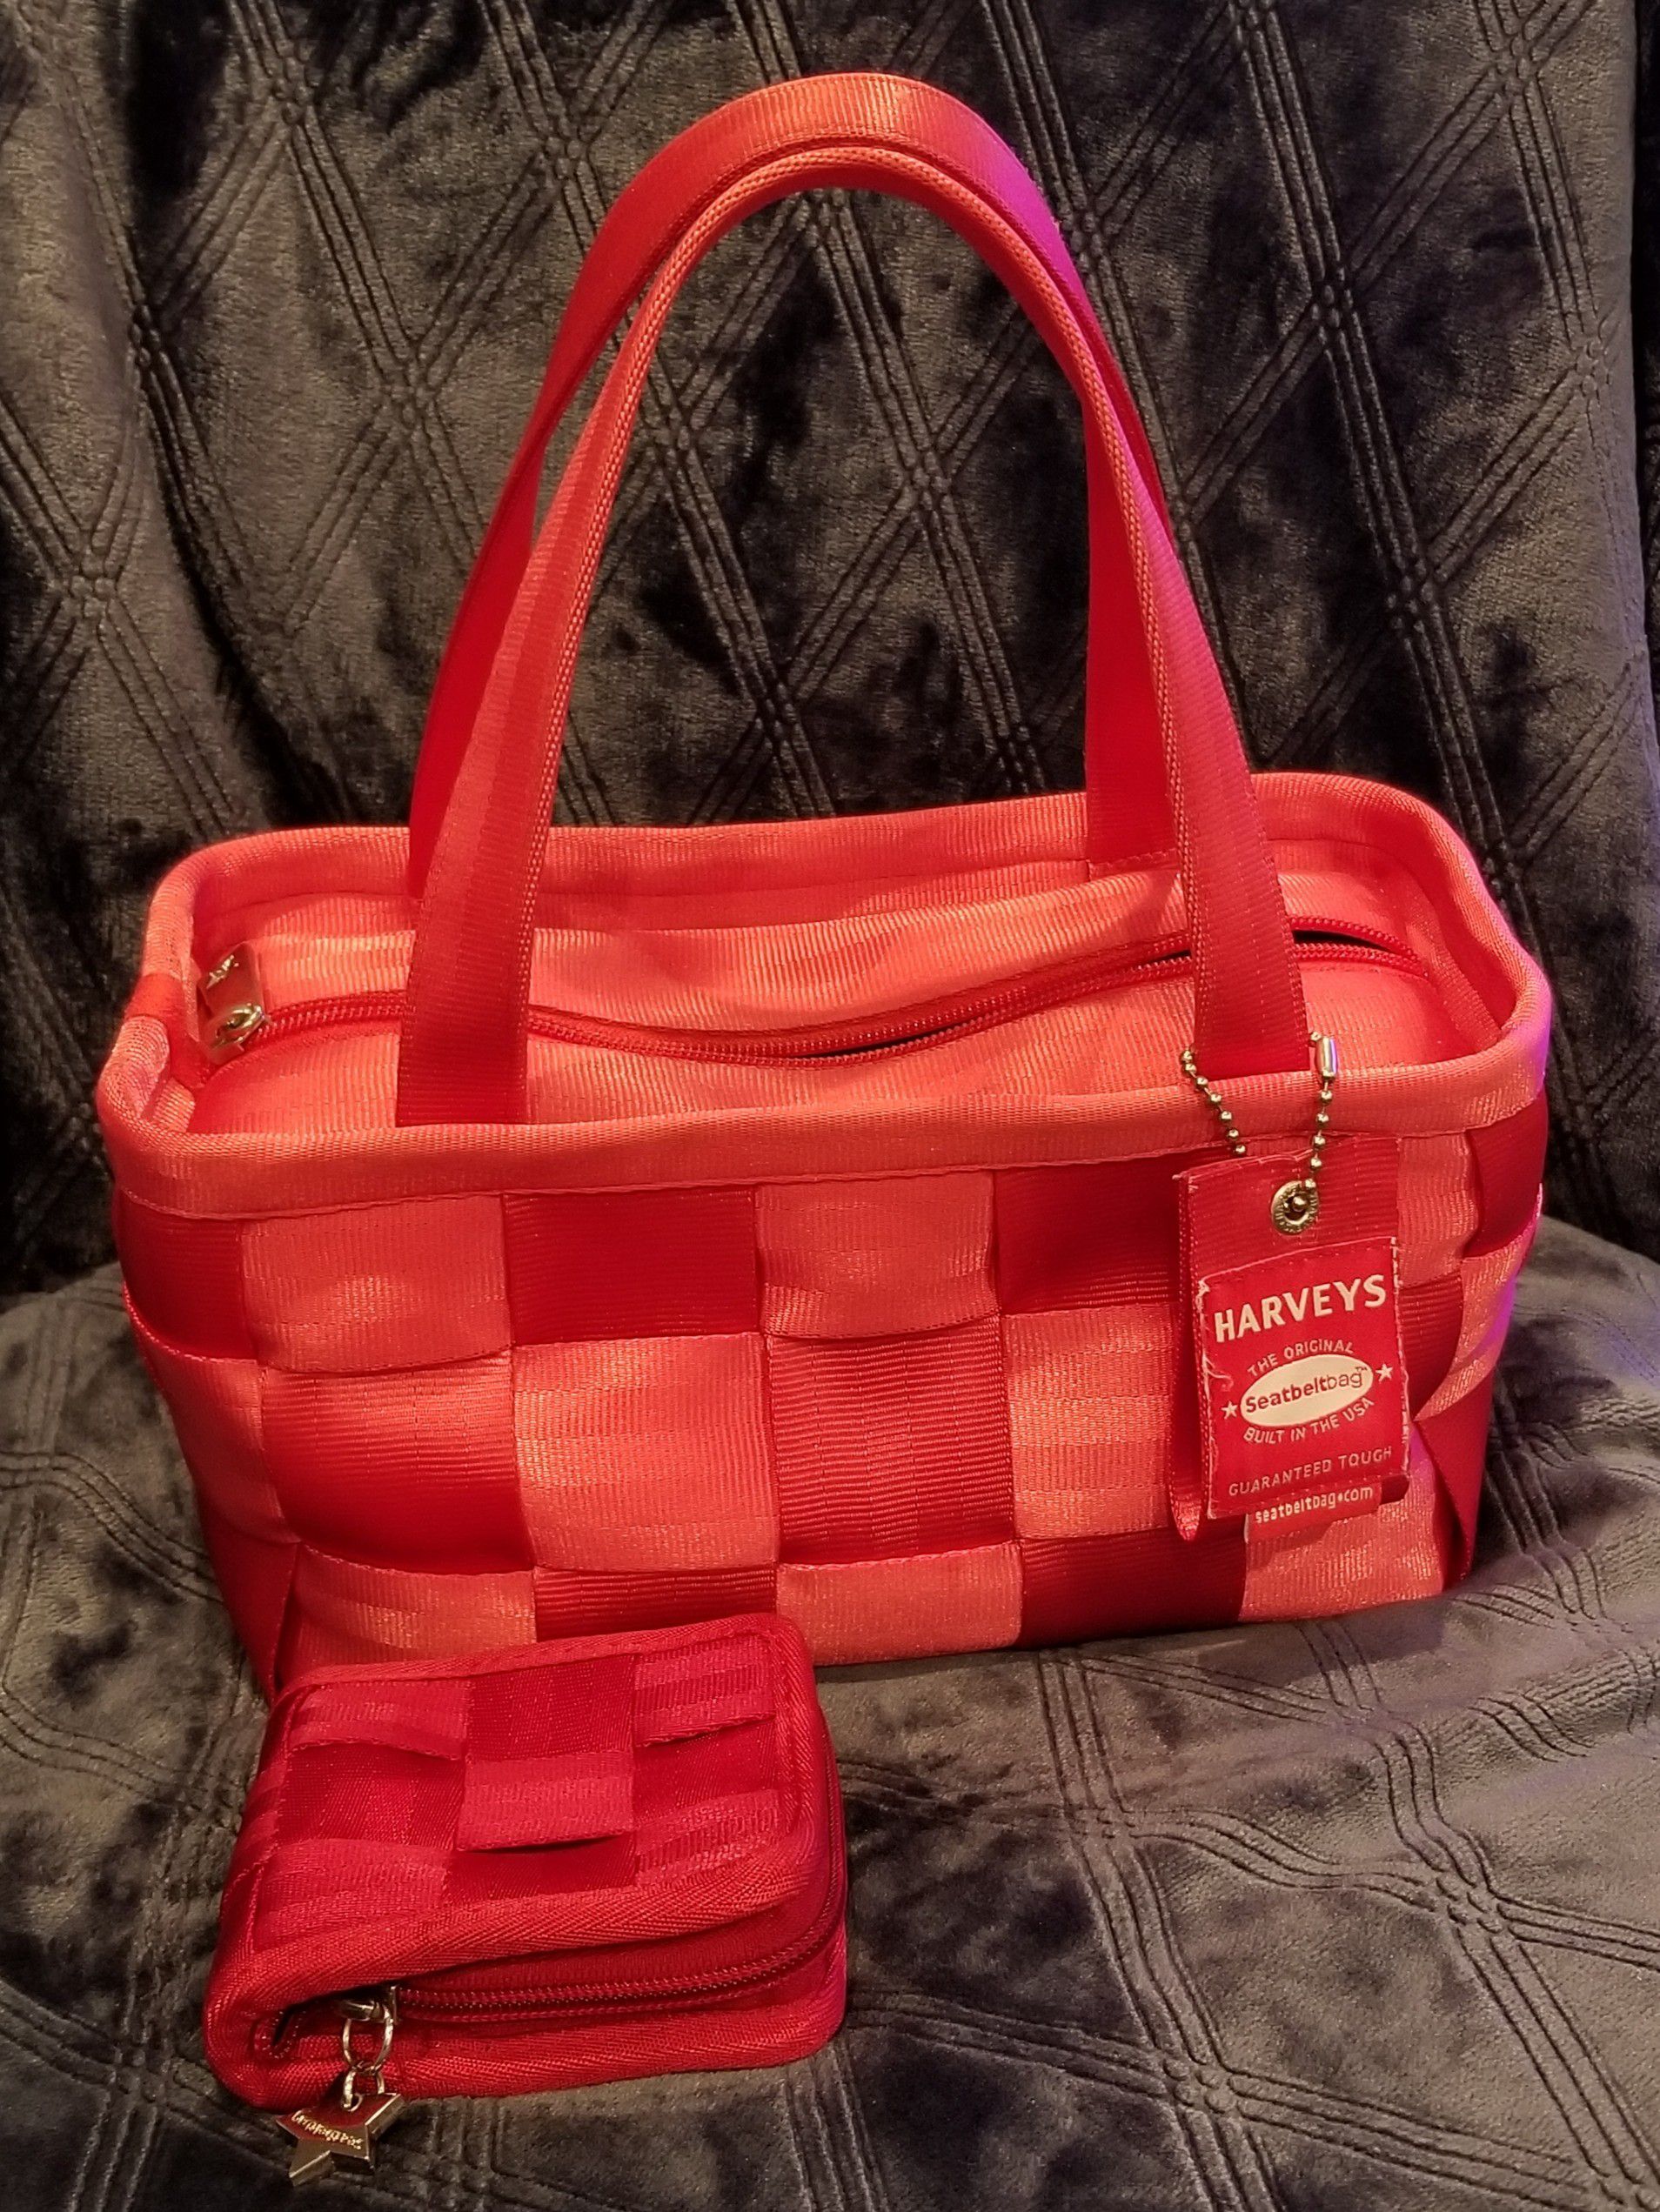 Red Harveys seatbelt purse and wallet